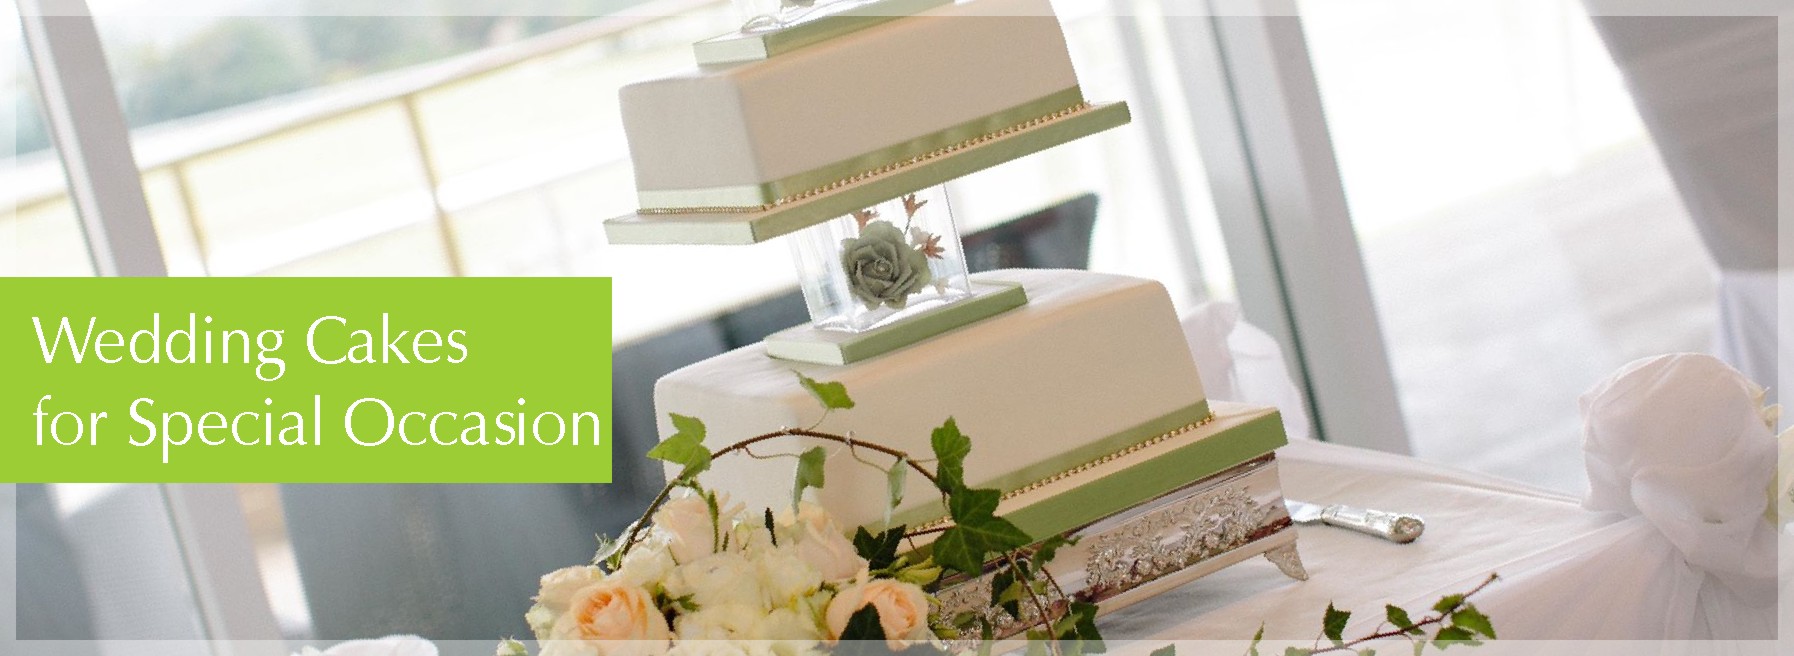 wedding cakes photo header